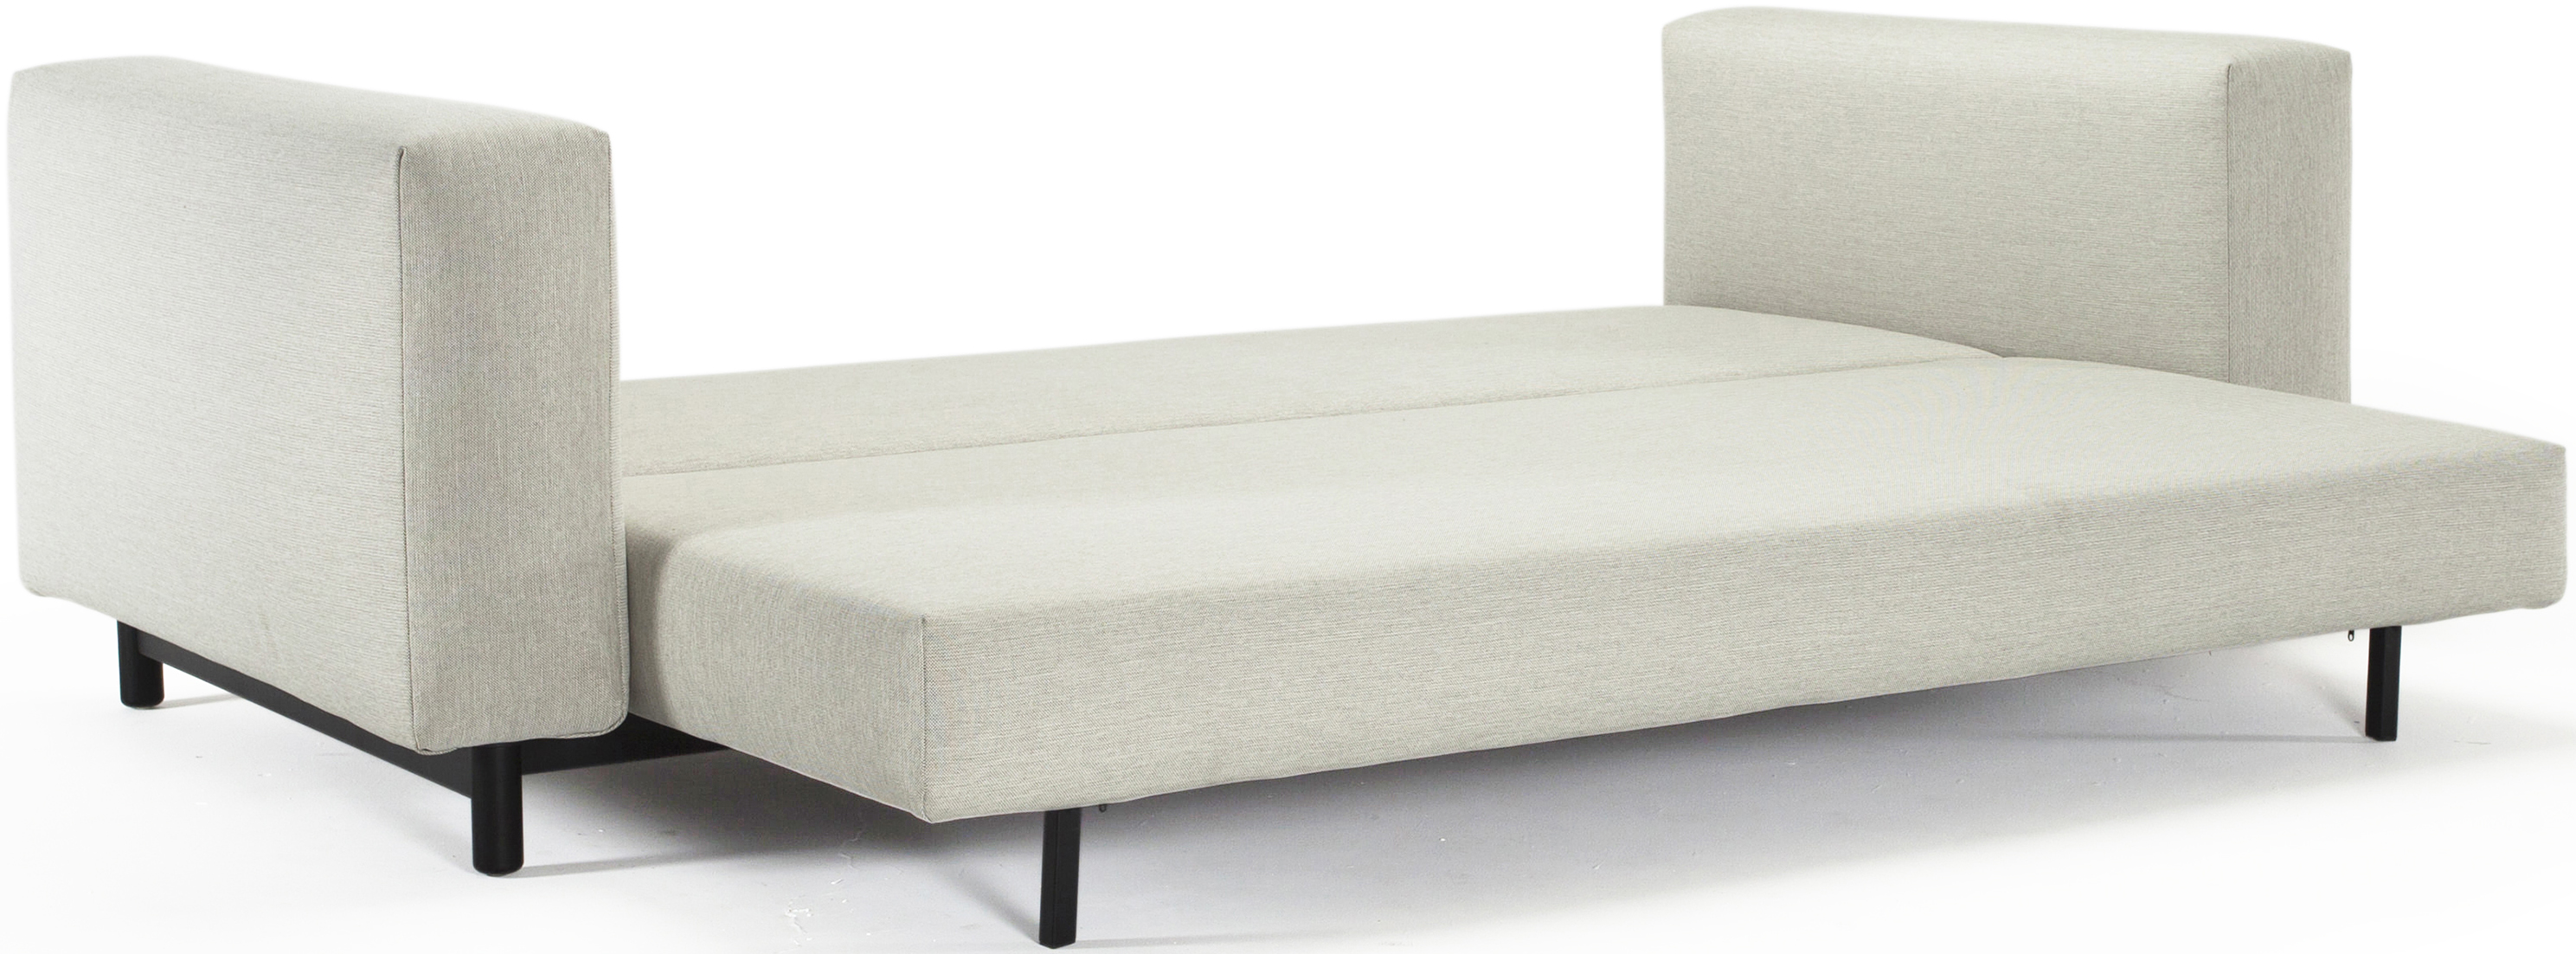 innovation magni sofa bed